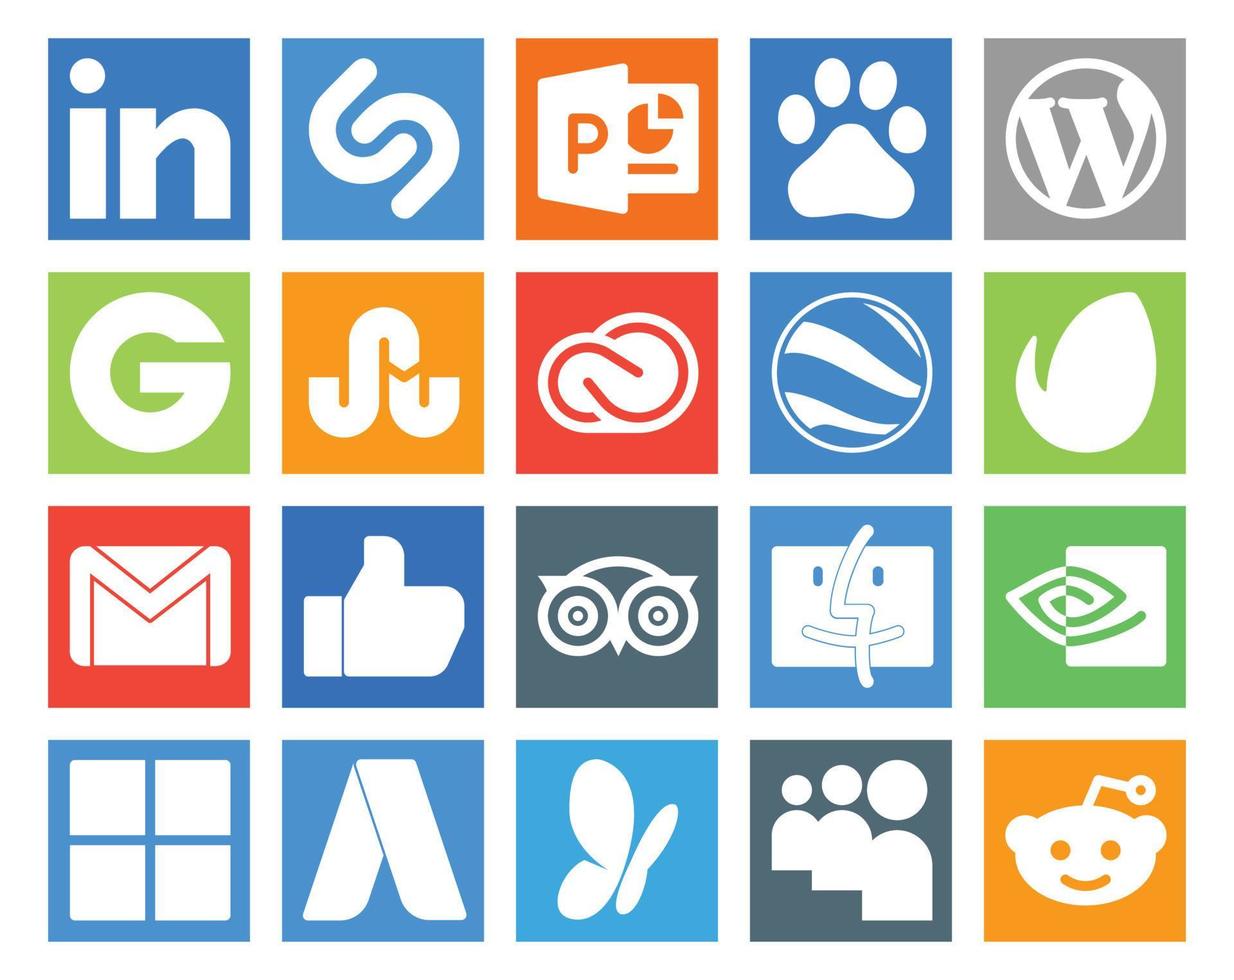 paquete de 20 íconos de redes sociales que incluye tripadvisor mail creative cloud email envato vector